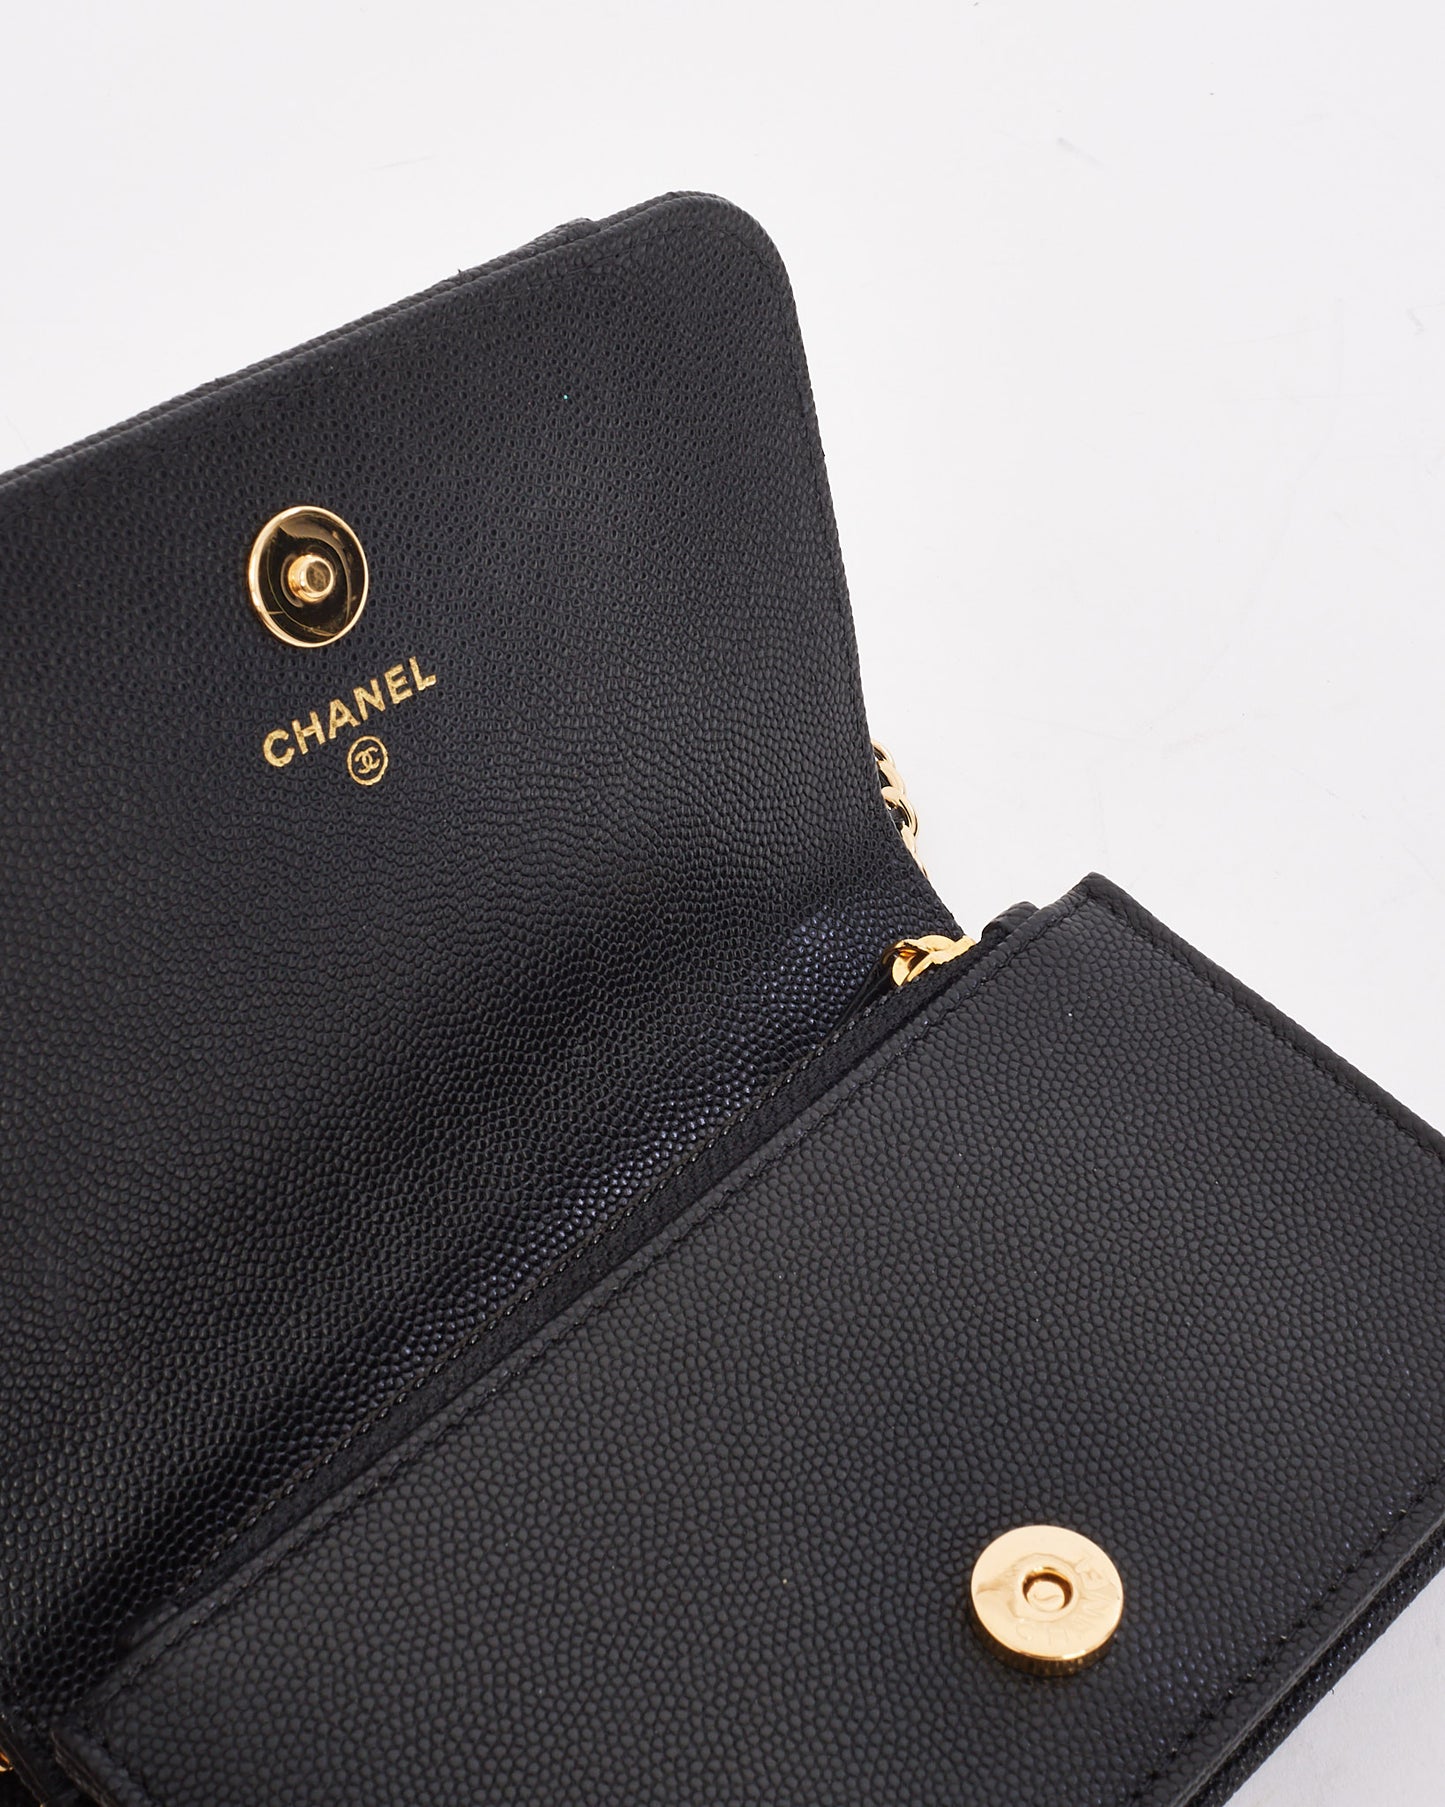 Pochette double poche en cuir caviar noir Chanel avec chaîne GHW